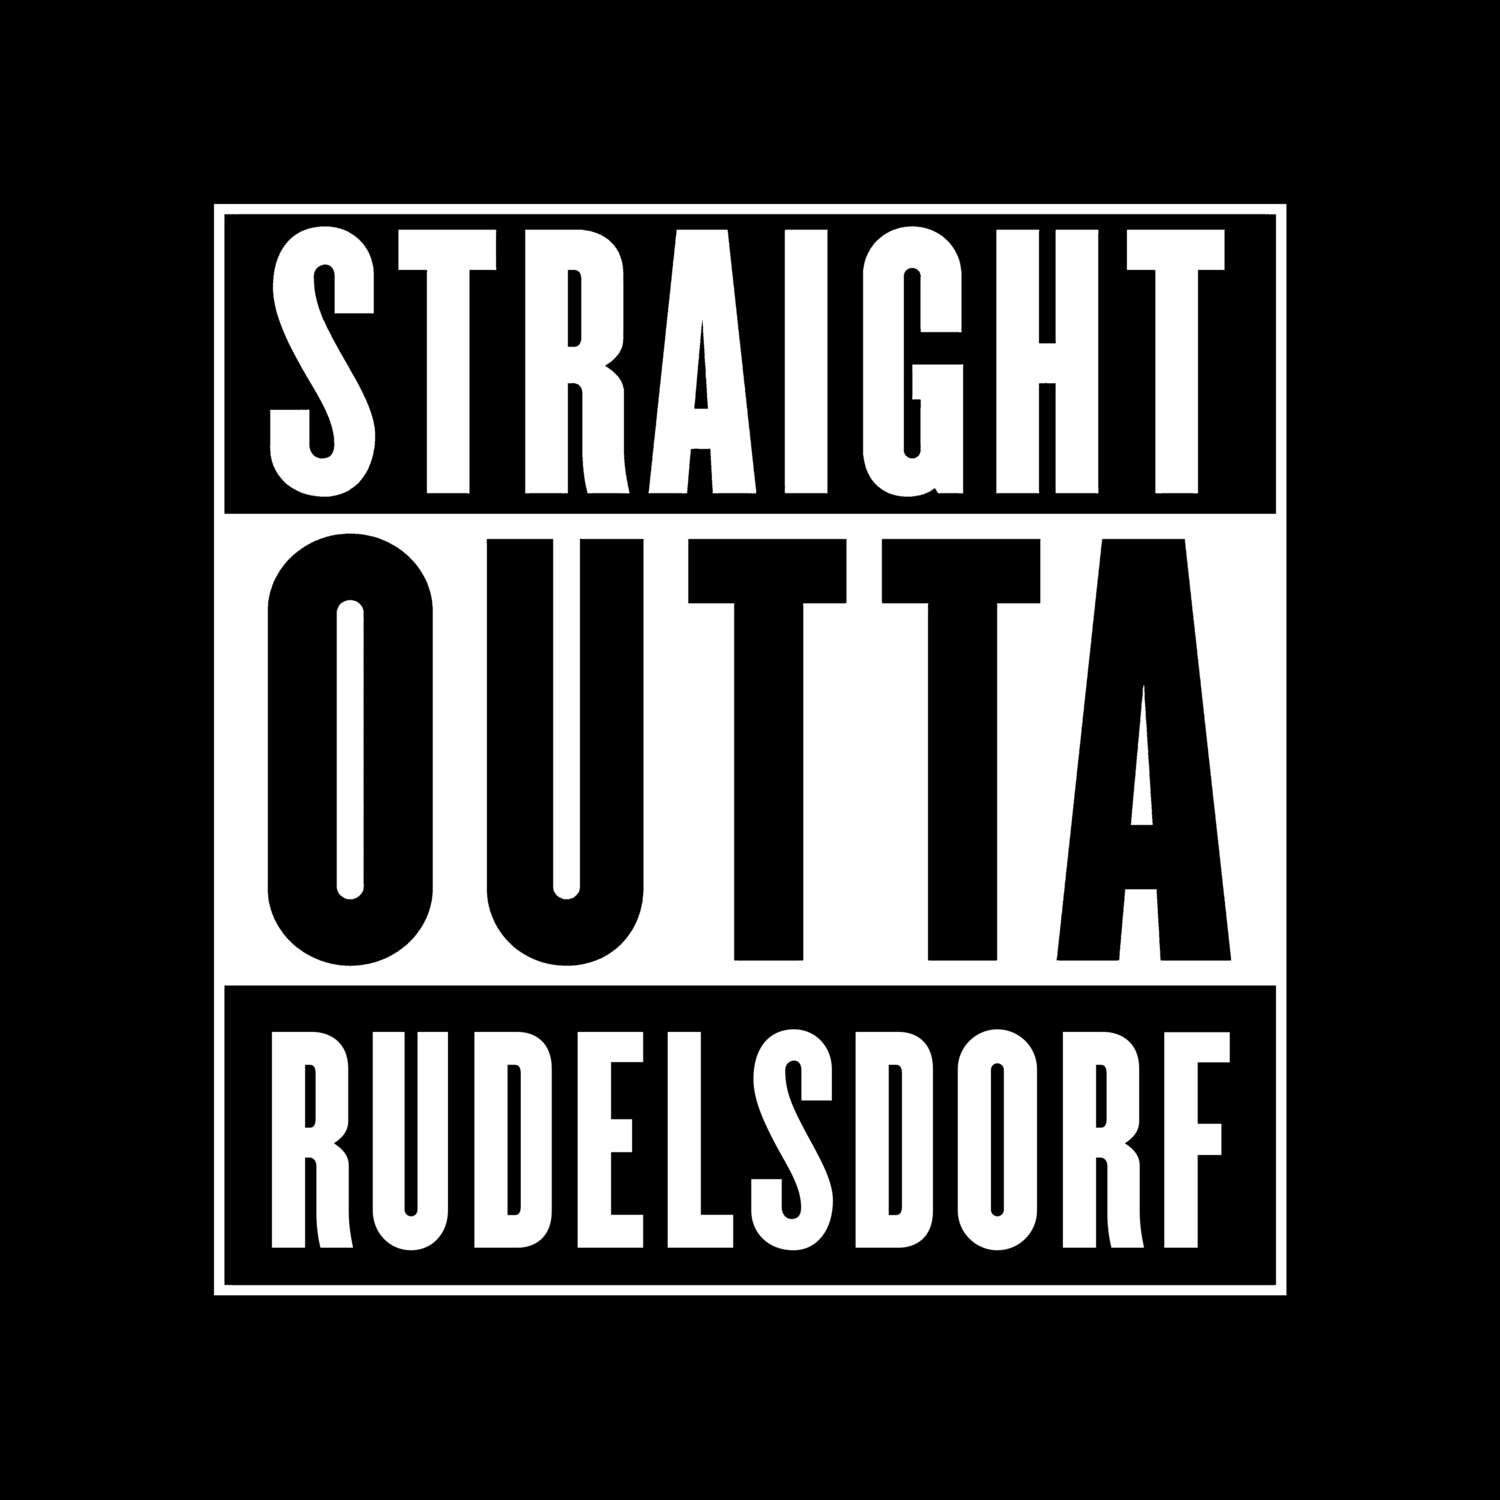 Rudelsdorf T-Shirt »Straight Outta«